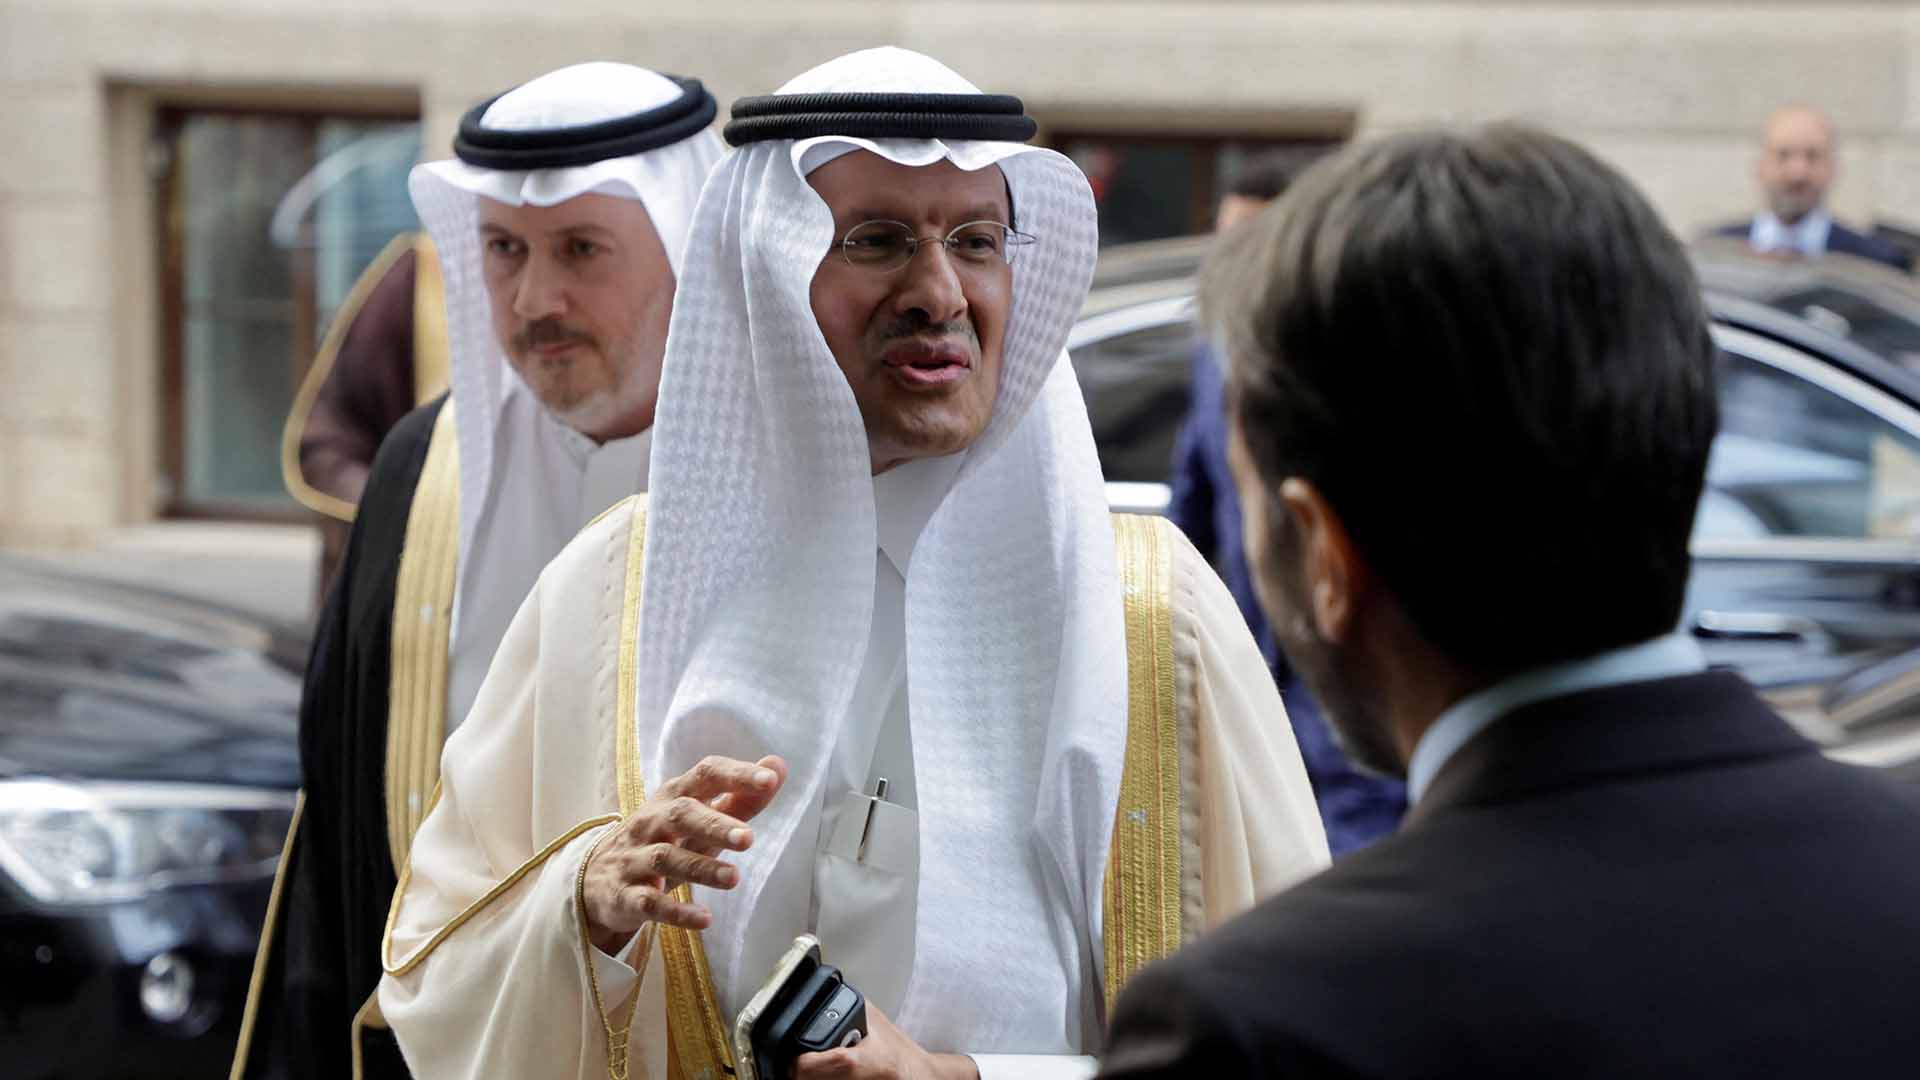 Prince Abdulaziz bin Salman Al Saud, Minister of Energy for the Kingdom of Saudi Arabia